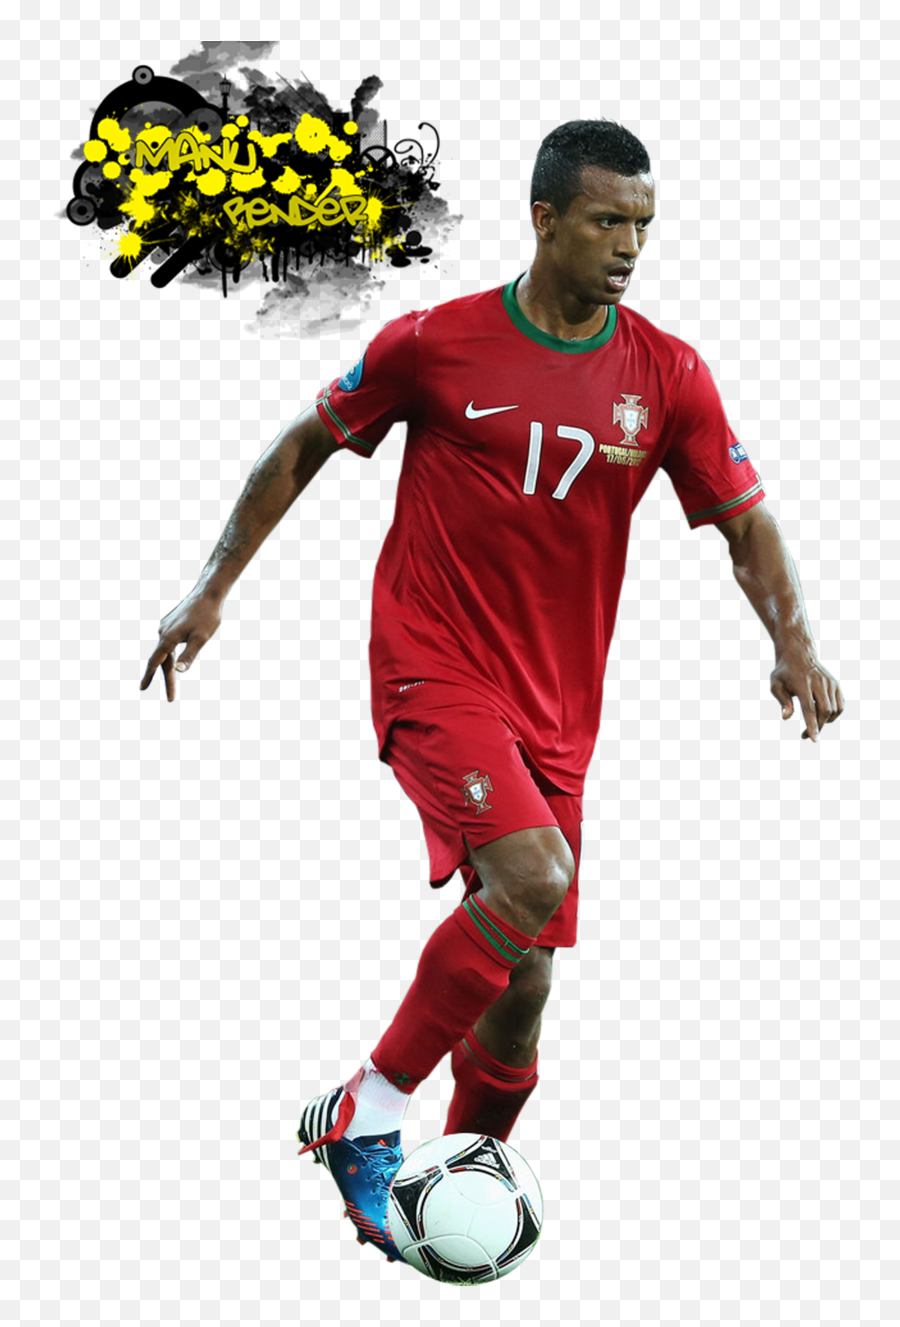 Nani Png Image With No Background - Ronaldo 7,Nani Png